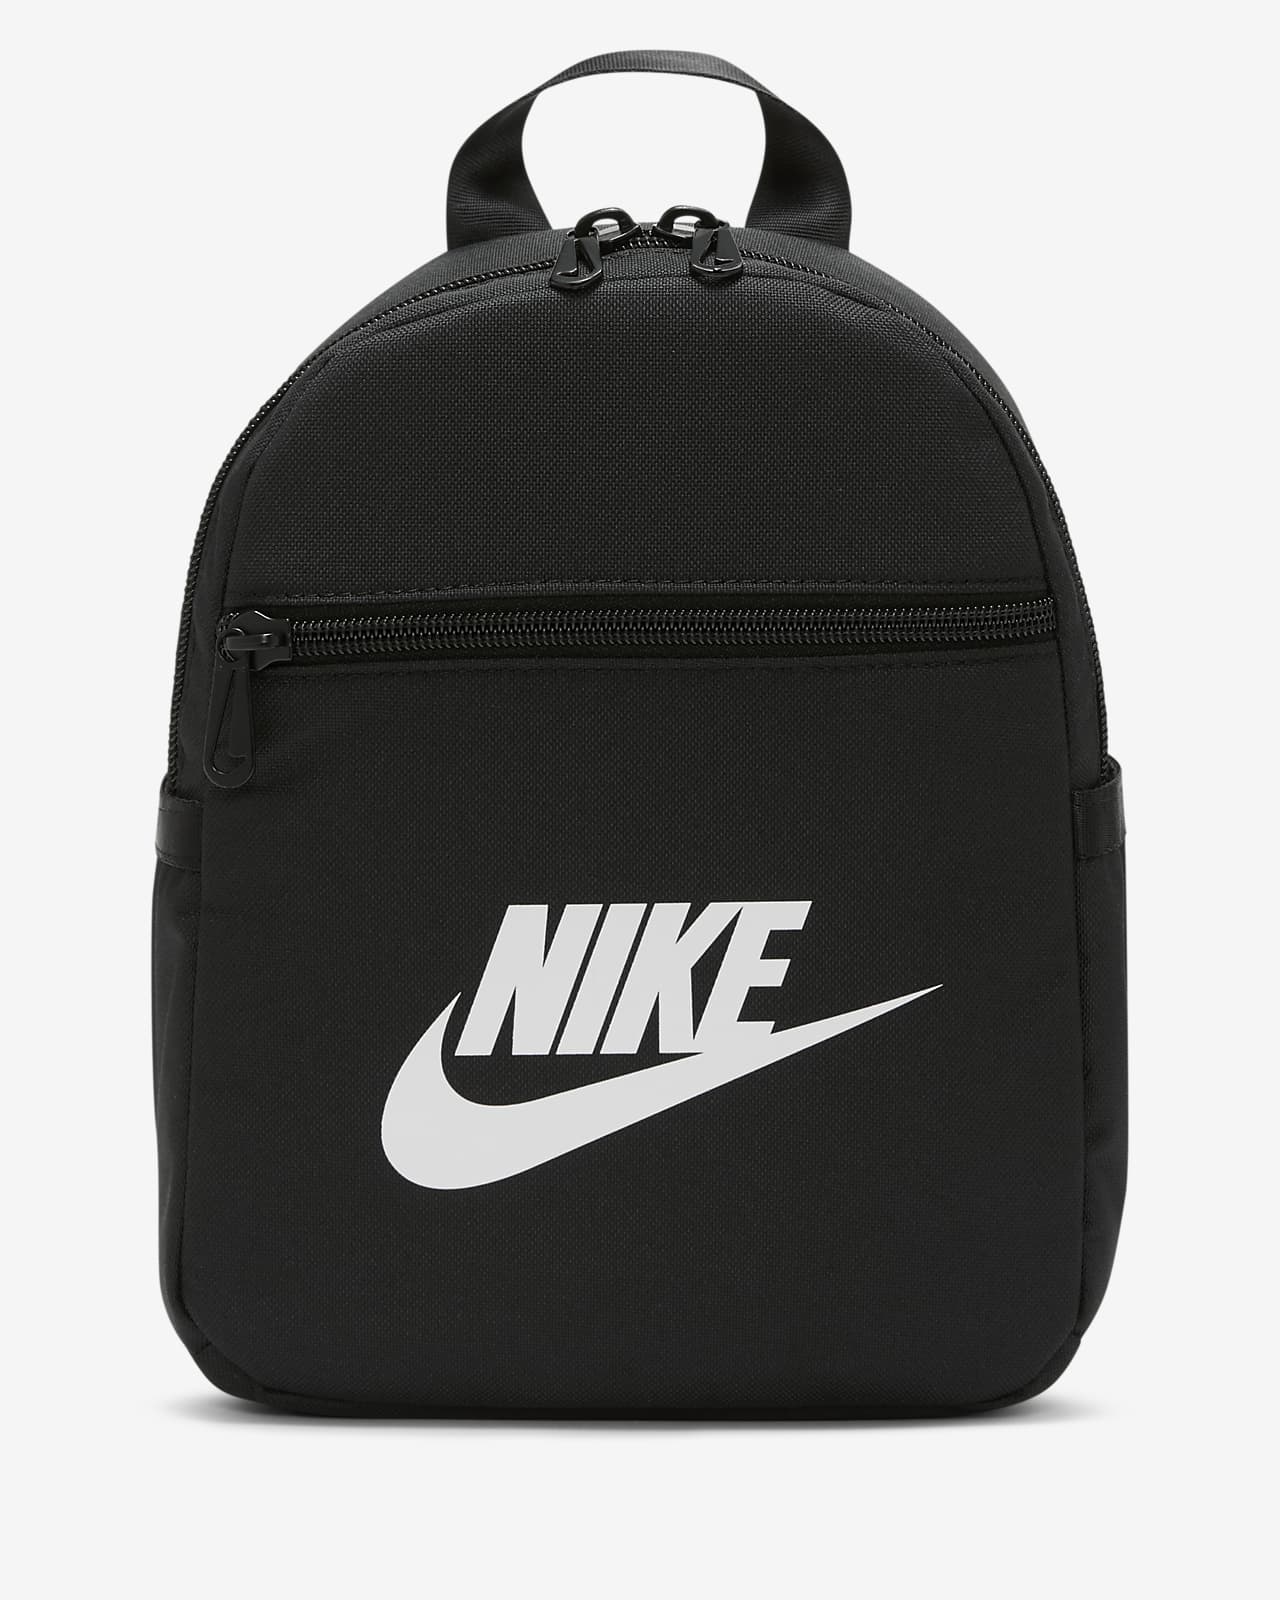 nike little backpack